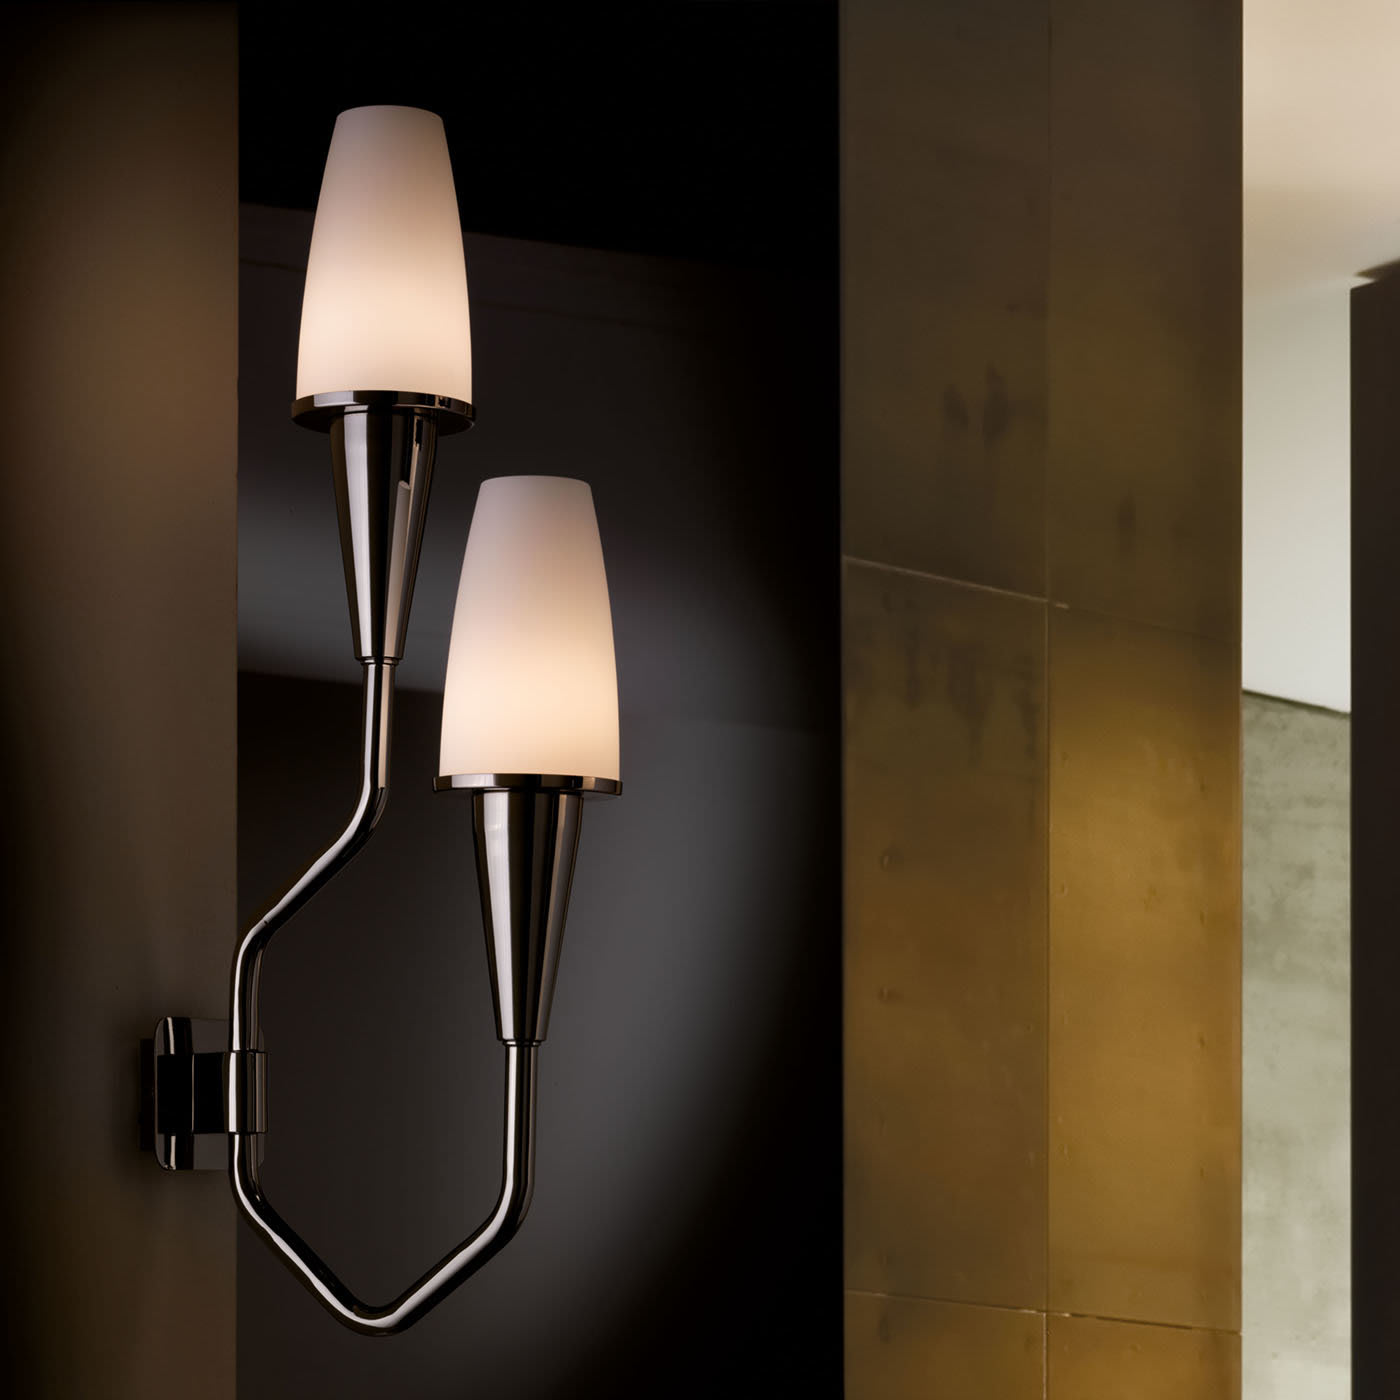 Gio Applique Wall Lamp by Roberto Lazzeroni - Estro